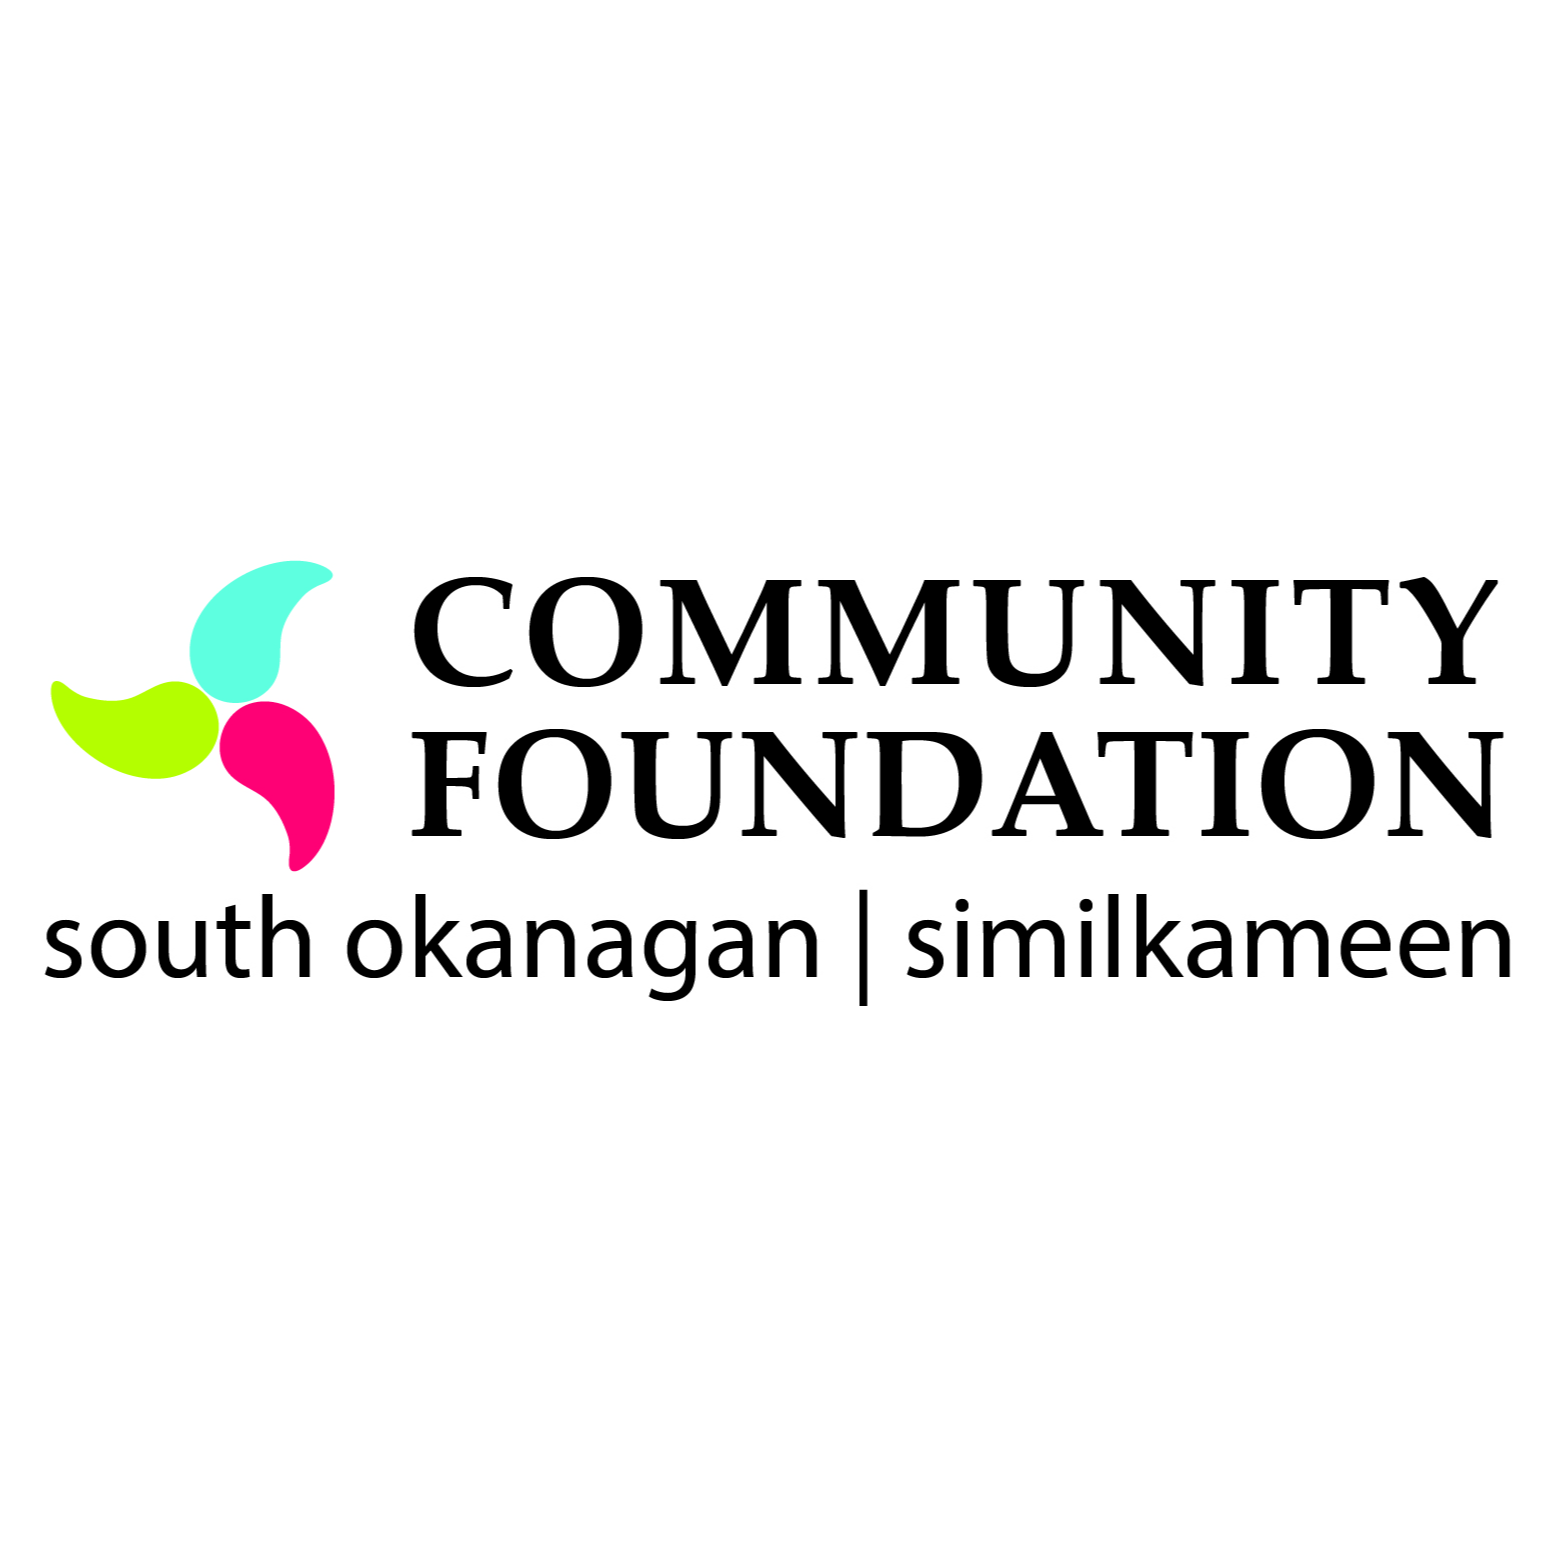 Community Foundation South Okanagan|Similkameen's logo